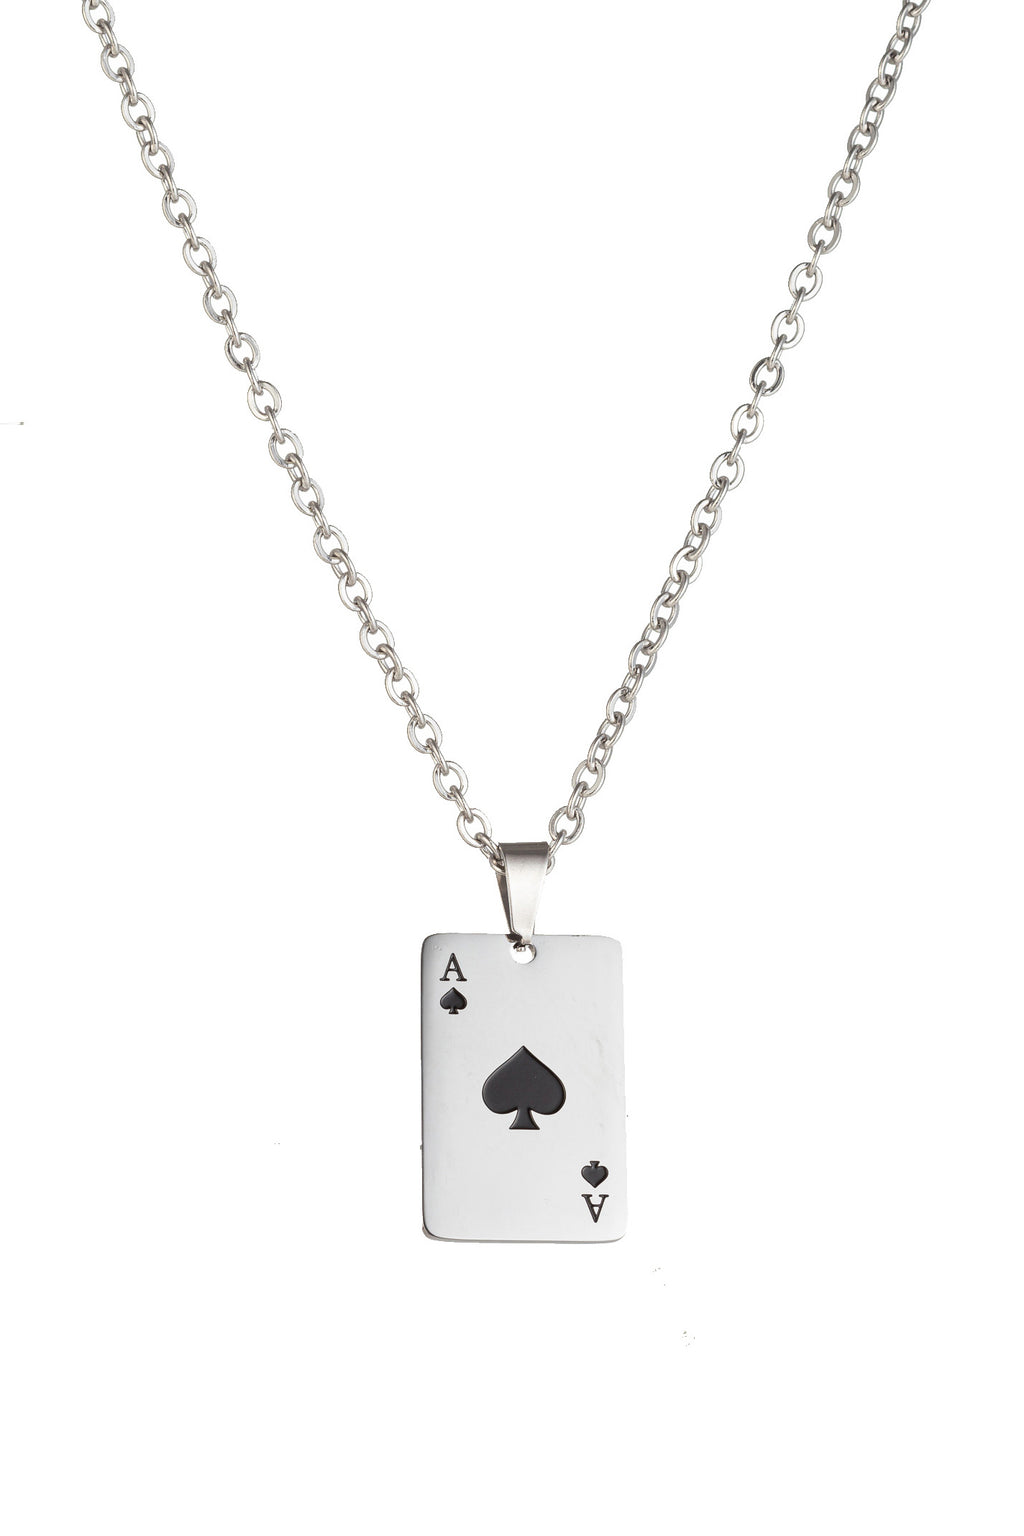 Ace of spades pendant necklace.